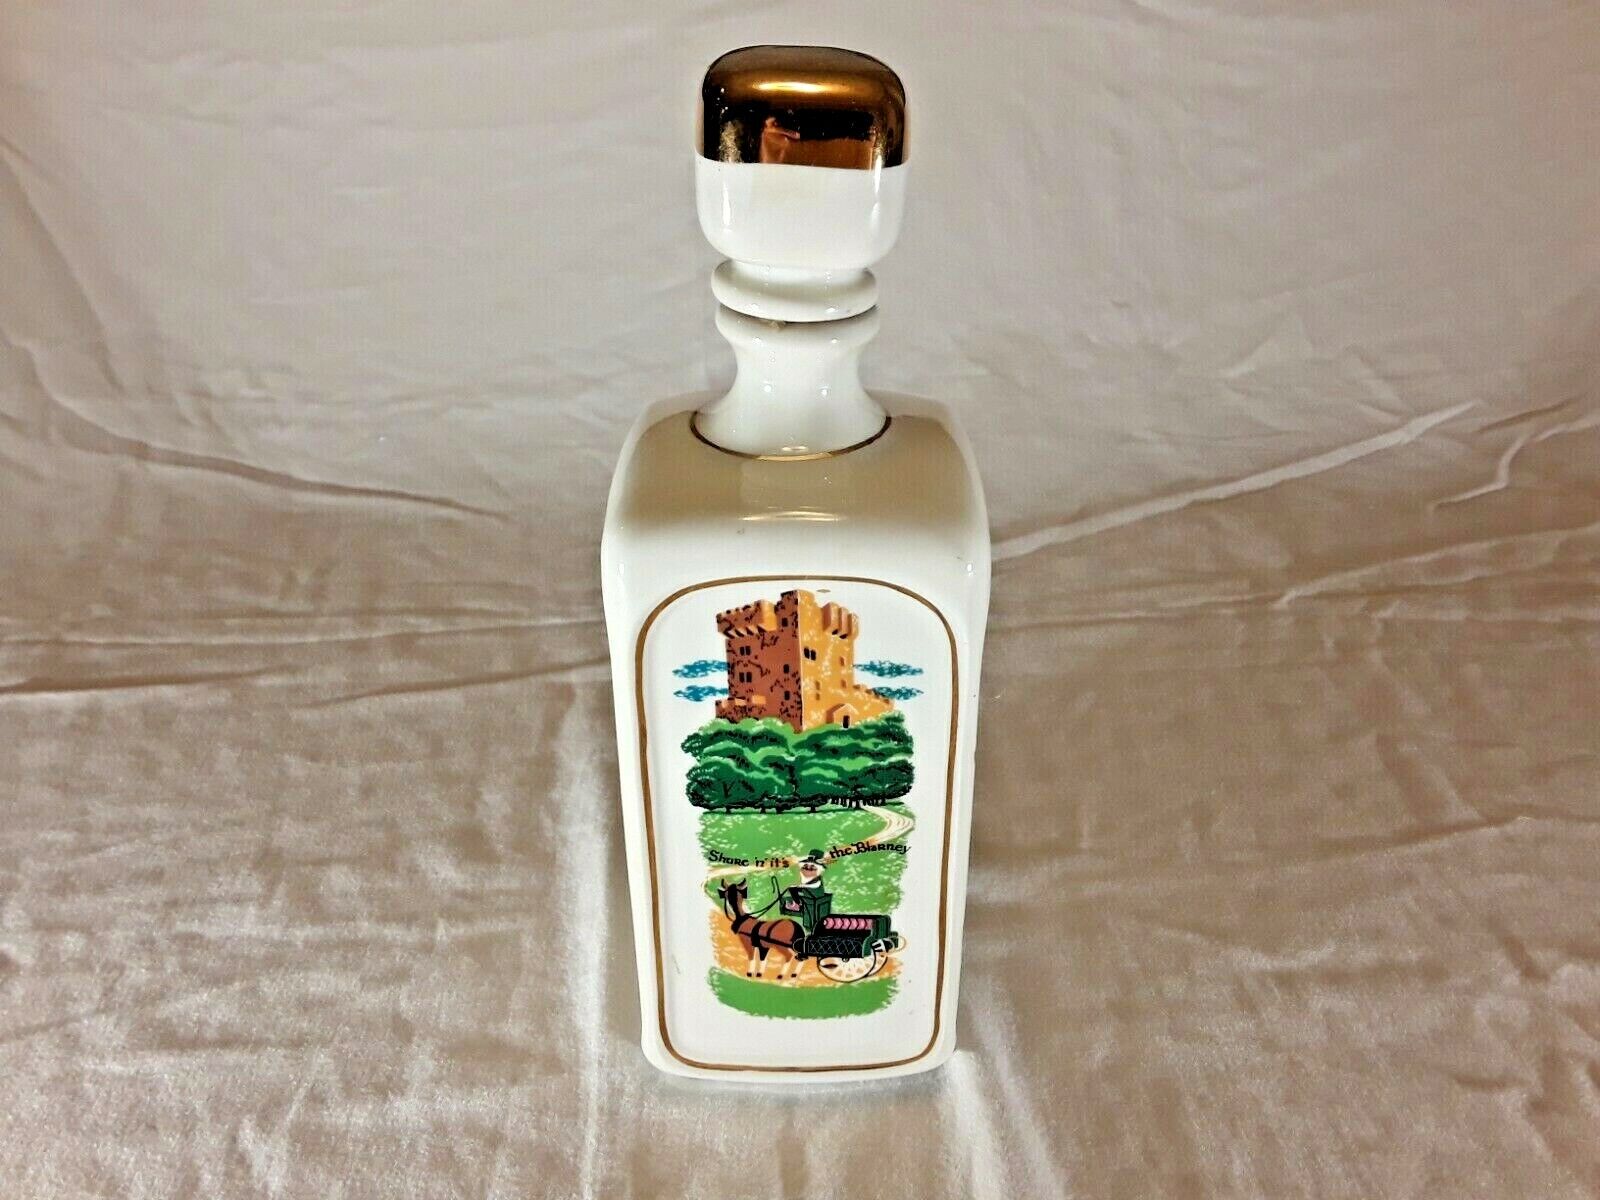 1970 Stitzel Weller Old Fitzgerald Blarney Bottle Irish Ireland Decanter